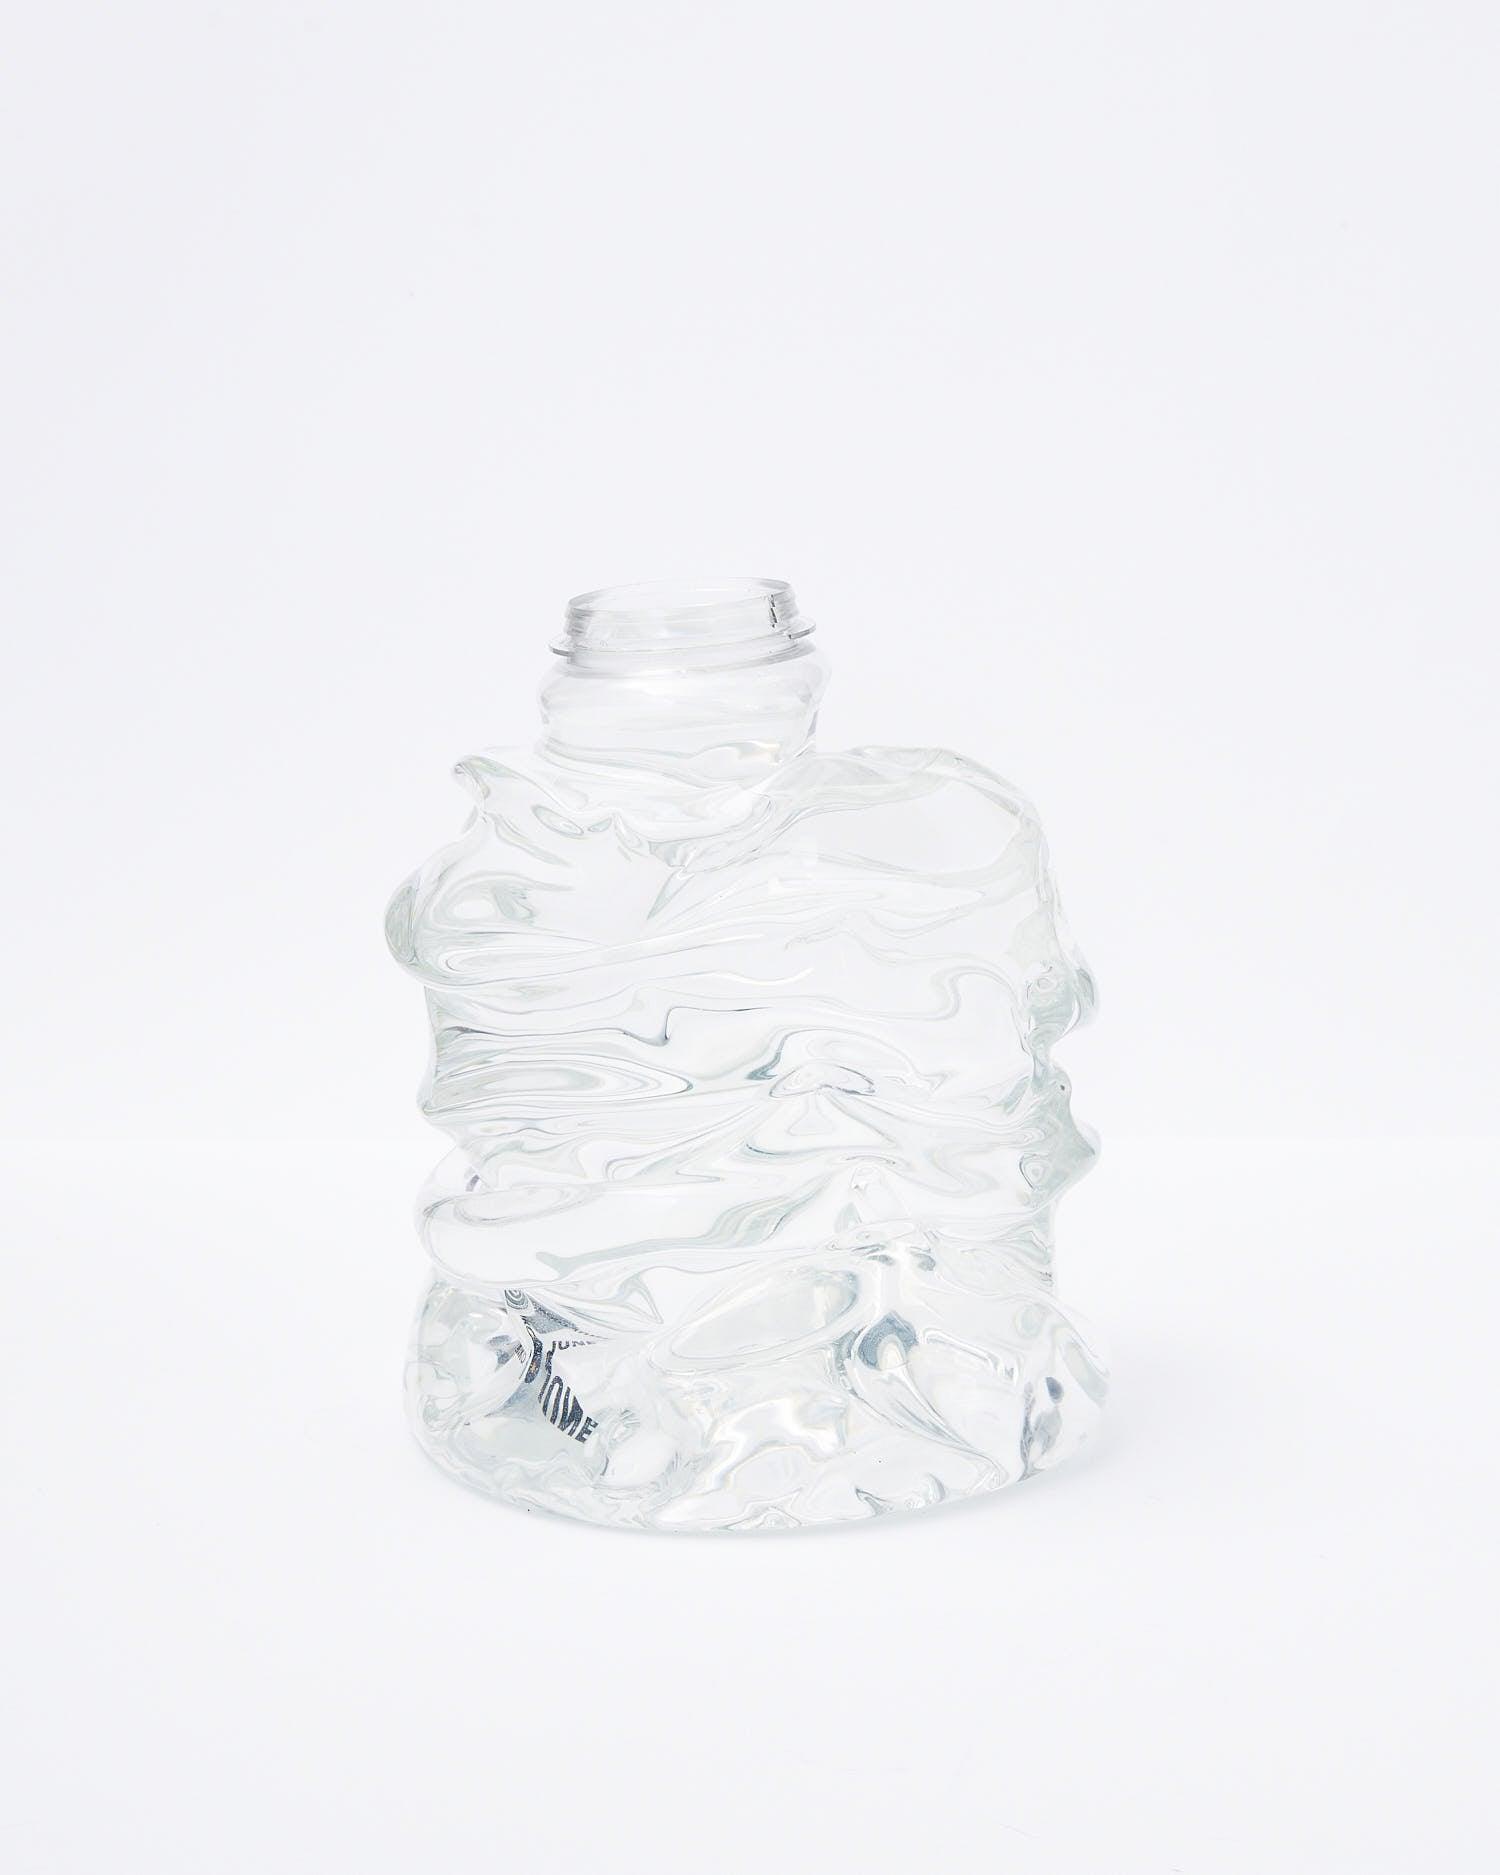 White background, transparent  handmade recycled plastic vase medium